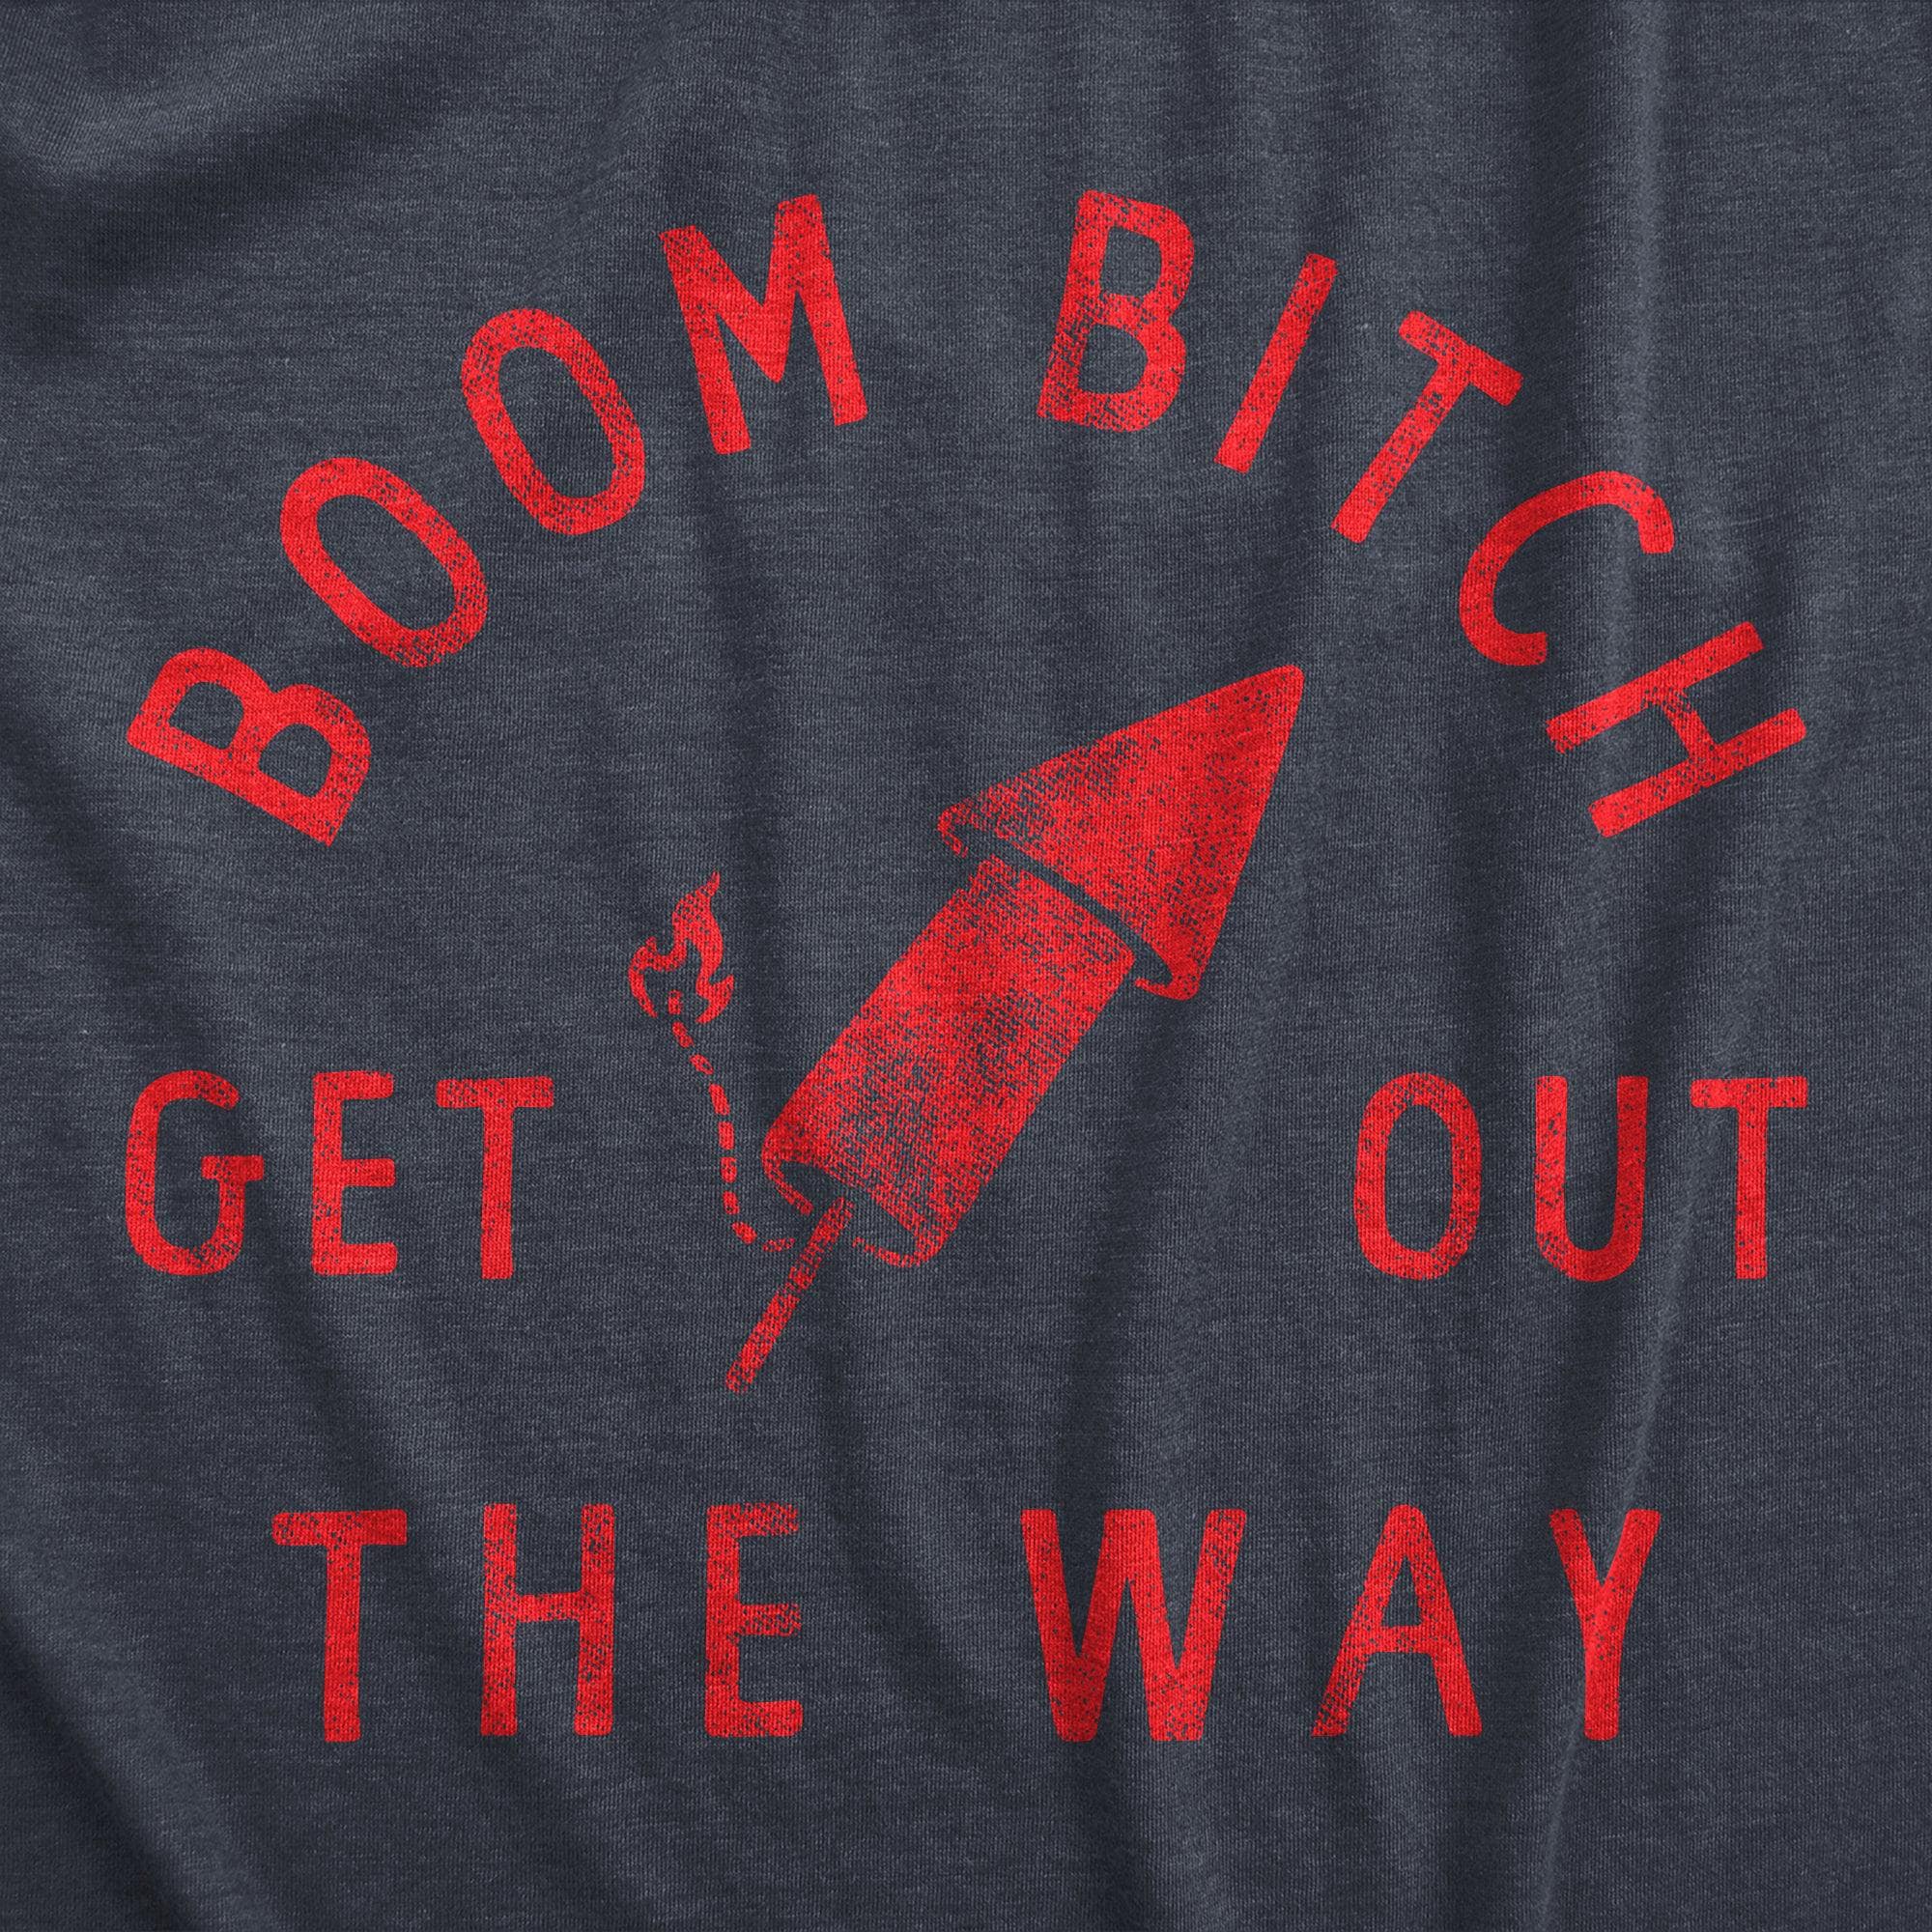 Boom Bitch Get Out The Way Men's Tshirt  -  Crazy Dog T-Shirts